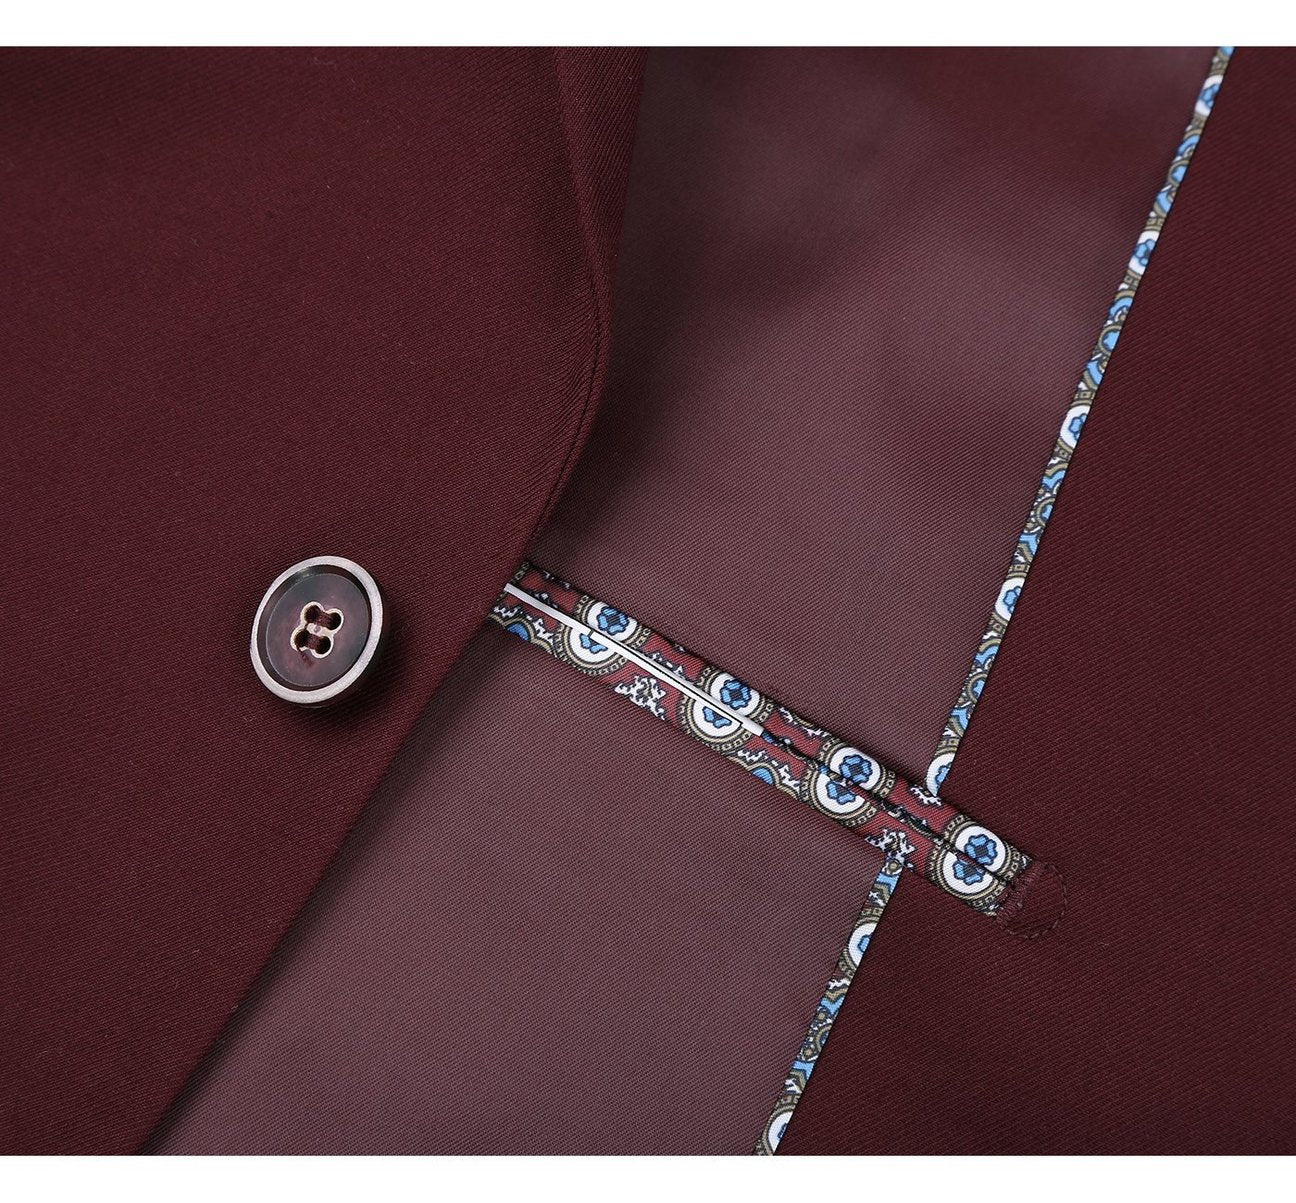 RENOIR Burgundy 2-Piece Slim Fit Single Breasted Notch Lapel Suit 201-8